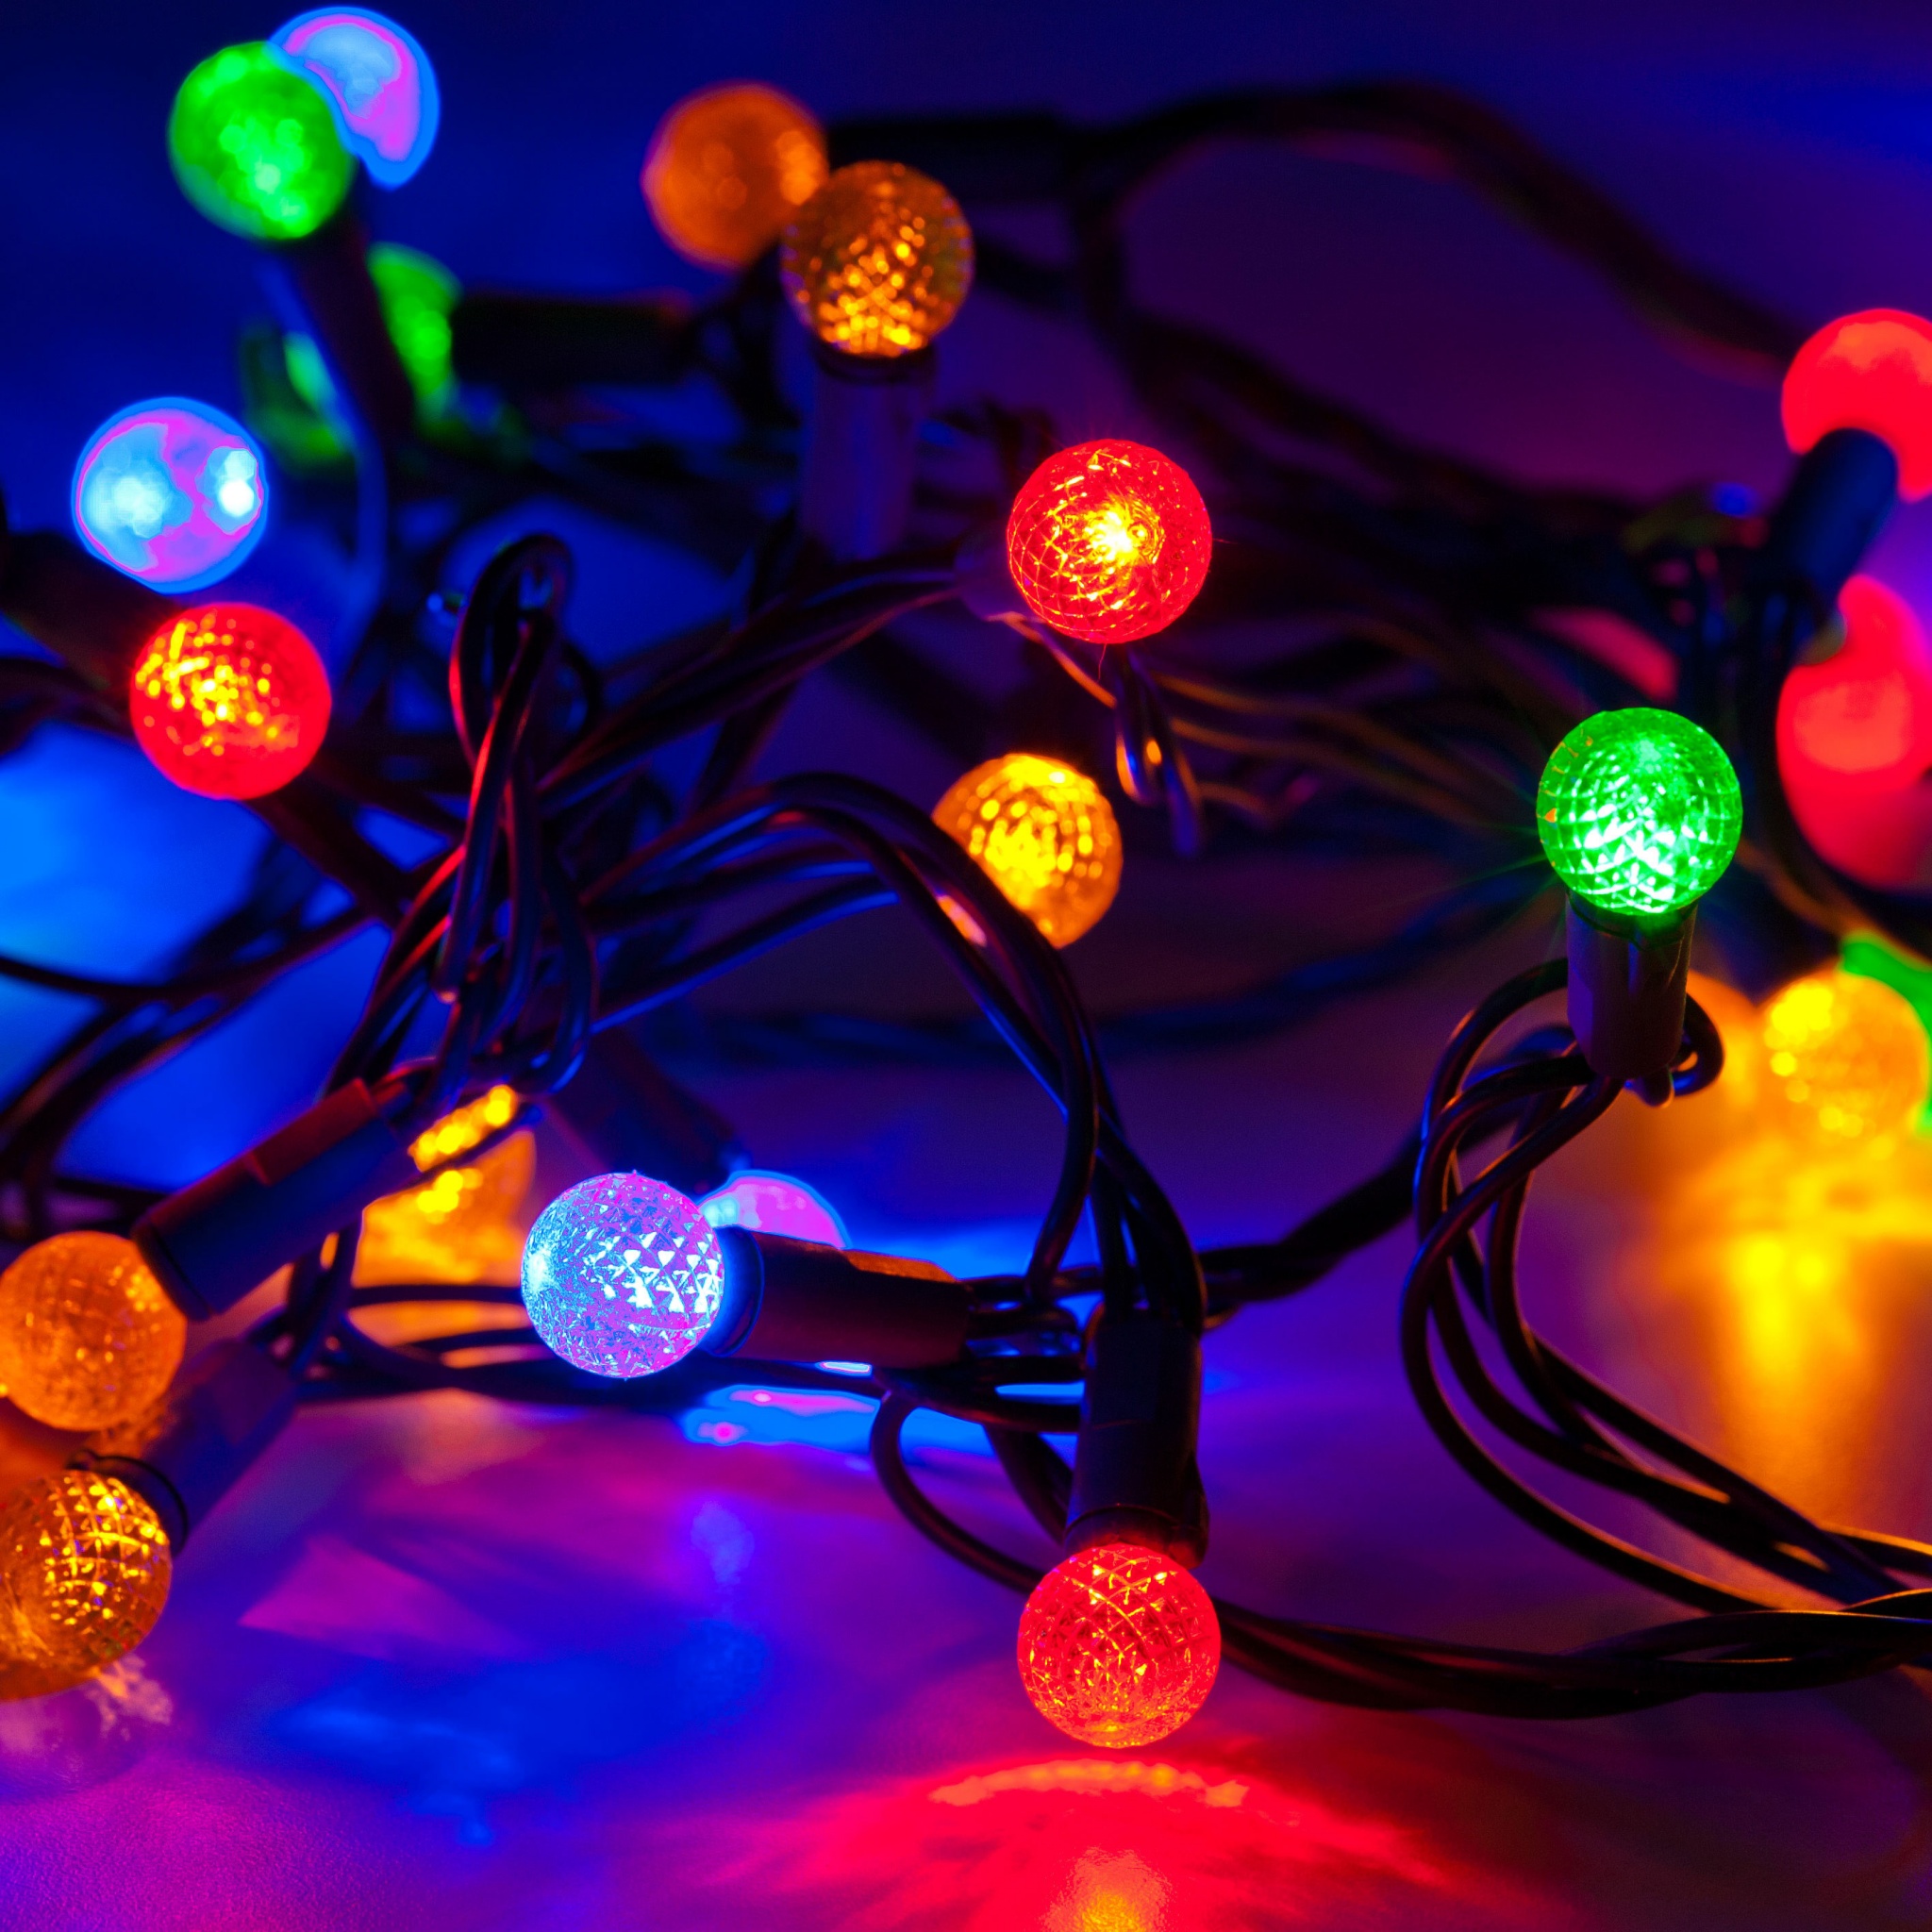 Party lights Wallpaper 4K, Christmas lights, Colorful, Celebrations